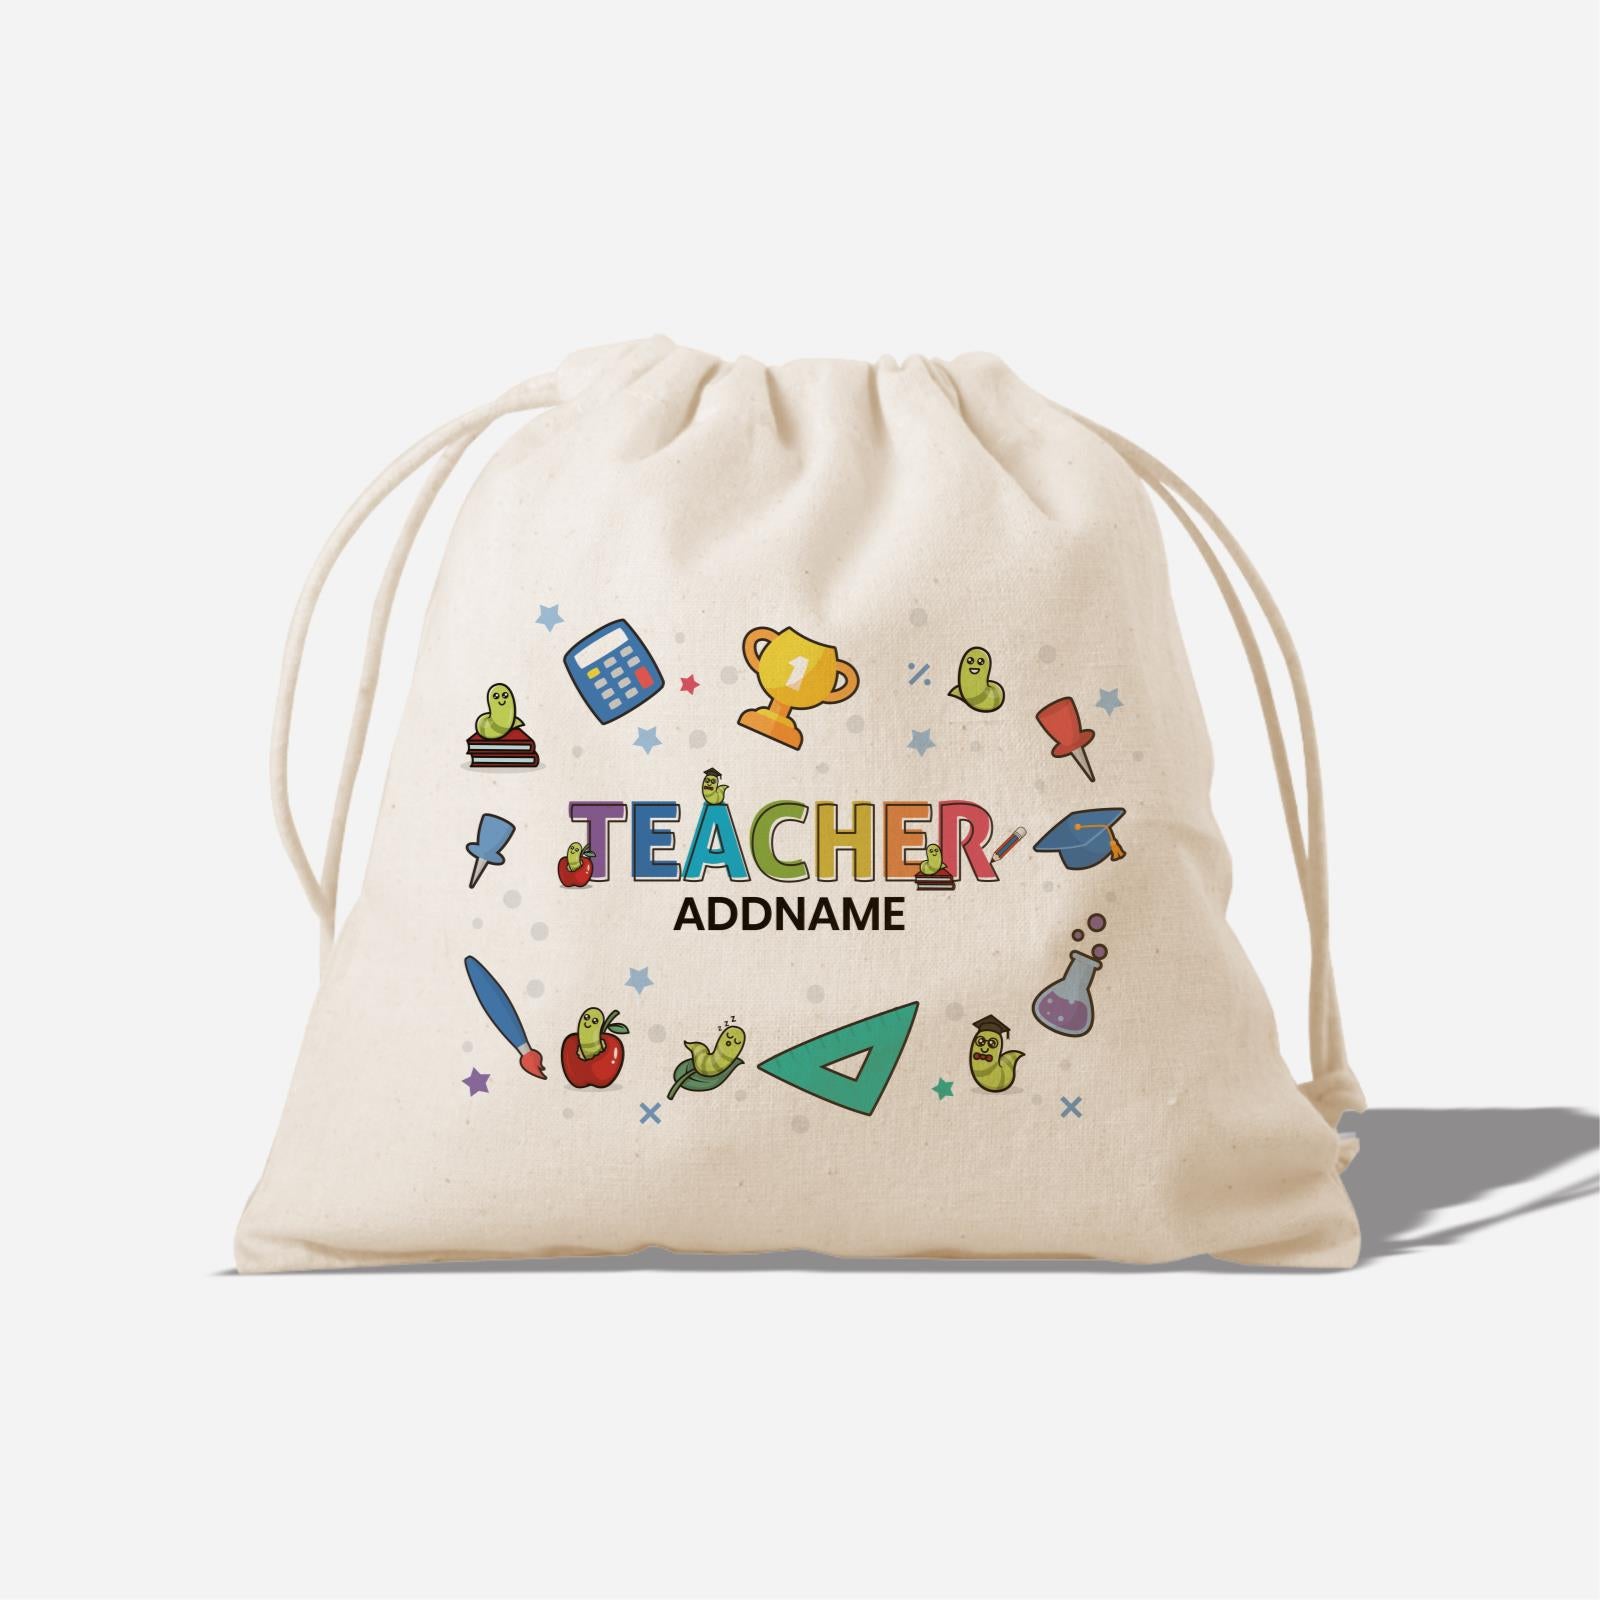 Teacher Addname - Satchel